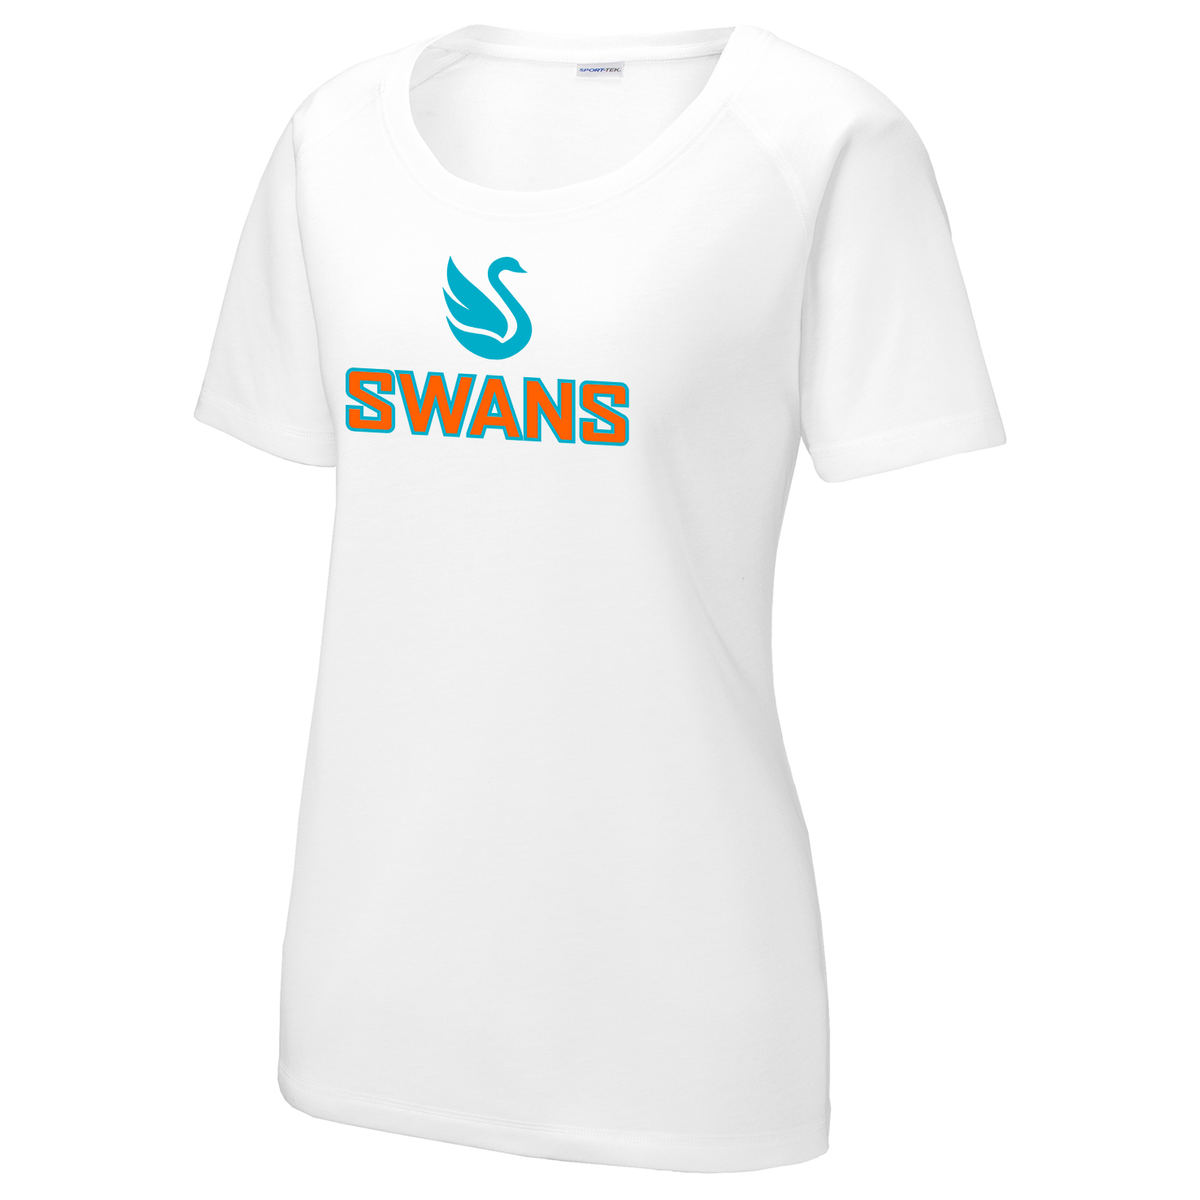 Swans Lacrosse Women's Raglan CottonTouch